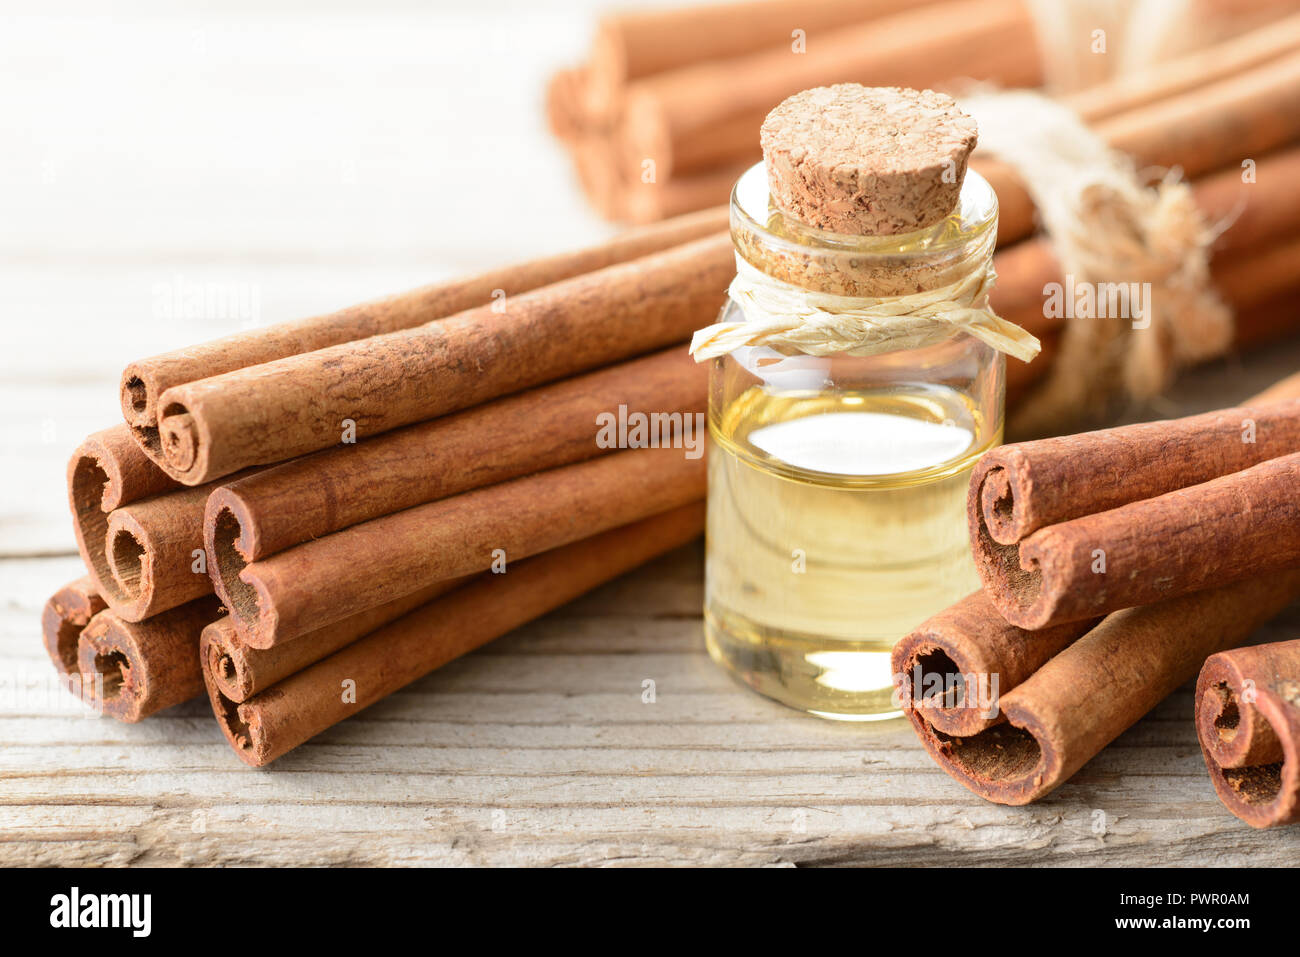 cinnamon oil and cinnamon sticks on the wooden board Stock Photo